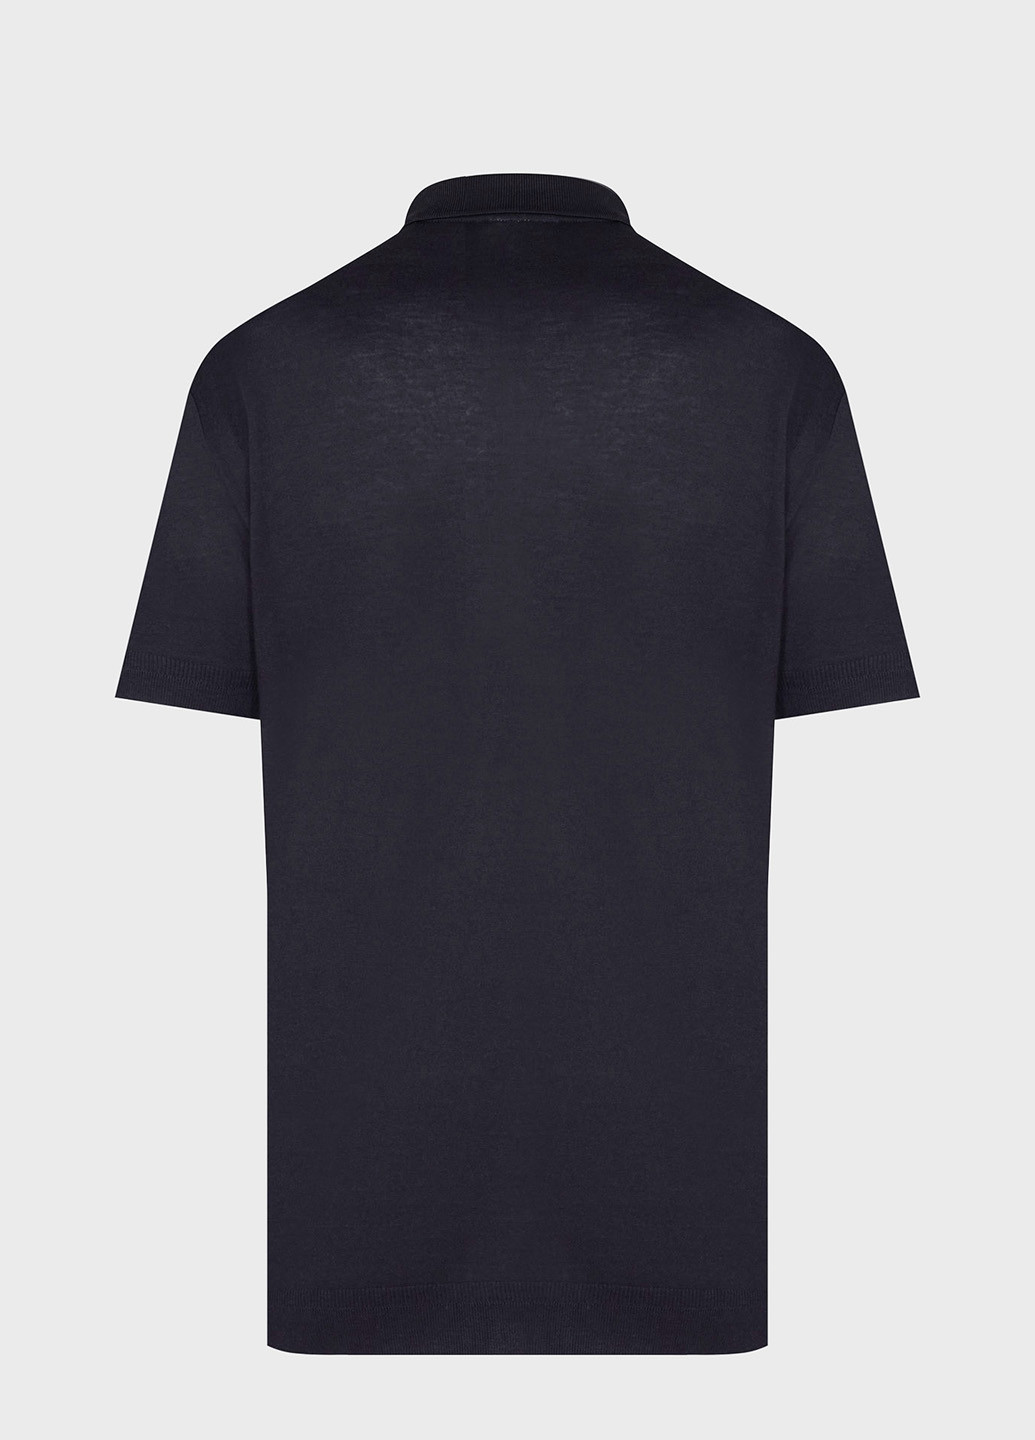 Черная футболка-поло для мужчин Gant однотонная